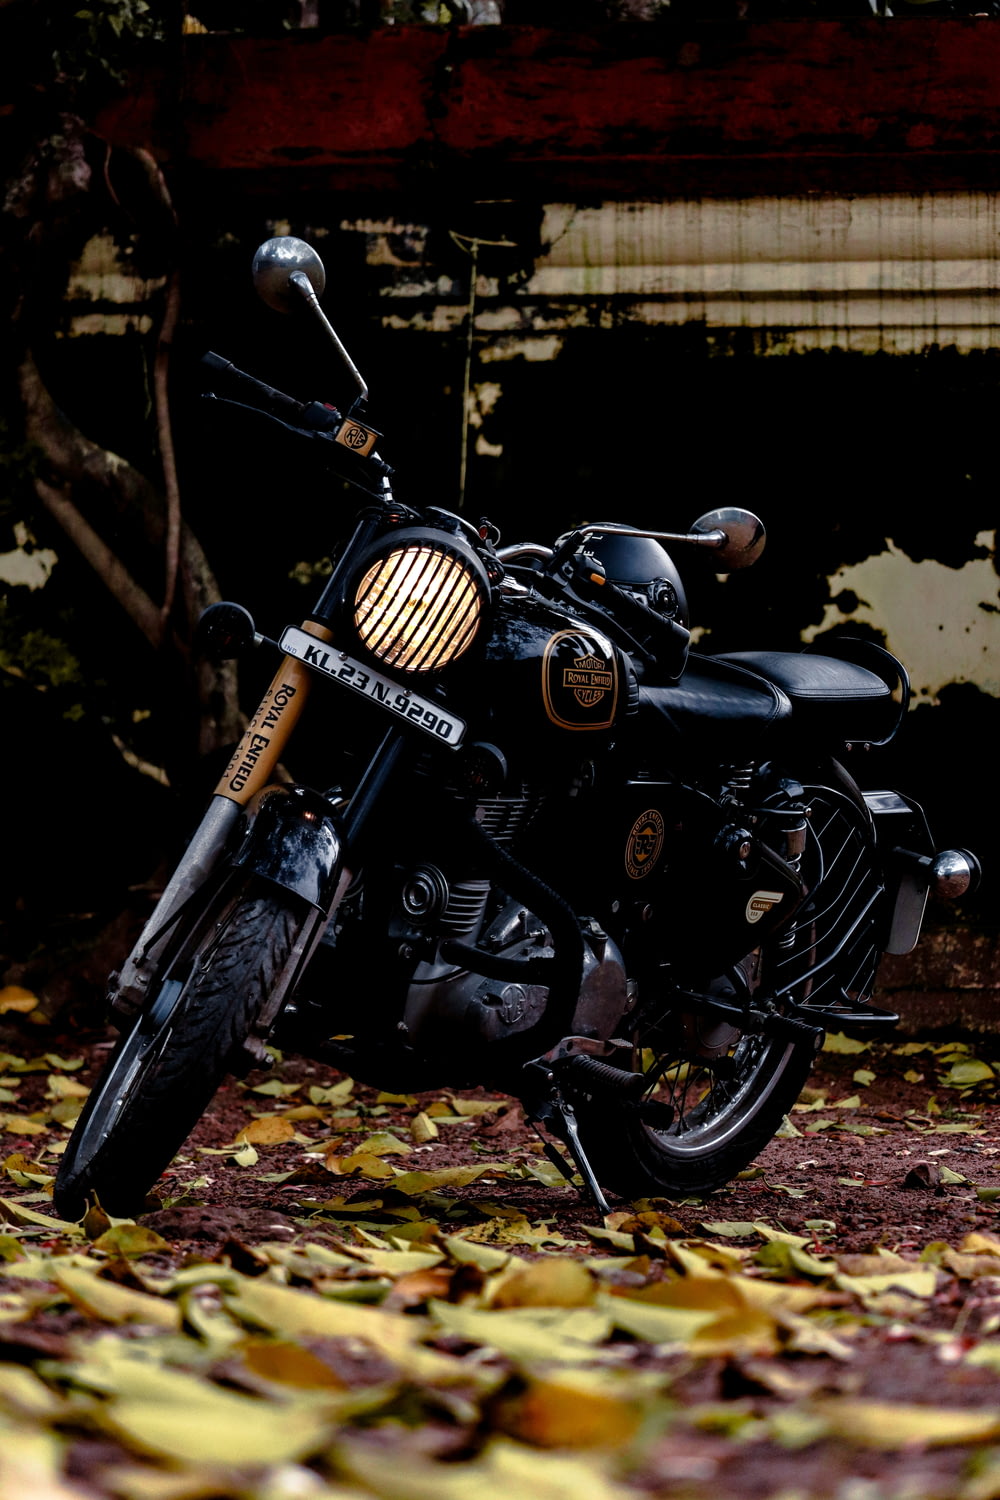 Motocicleta cruiser negra y plateada